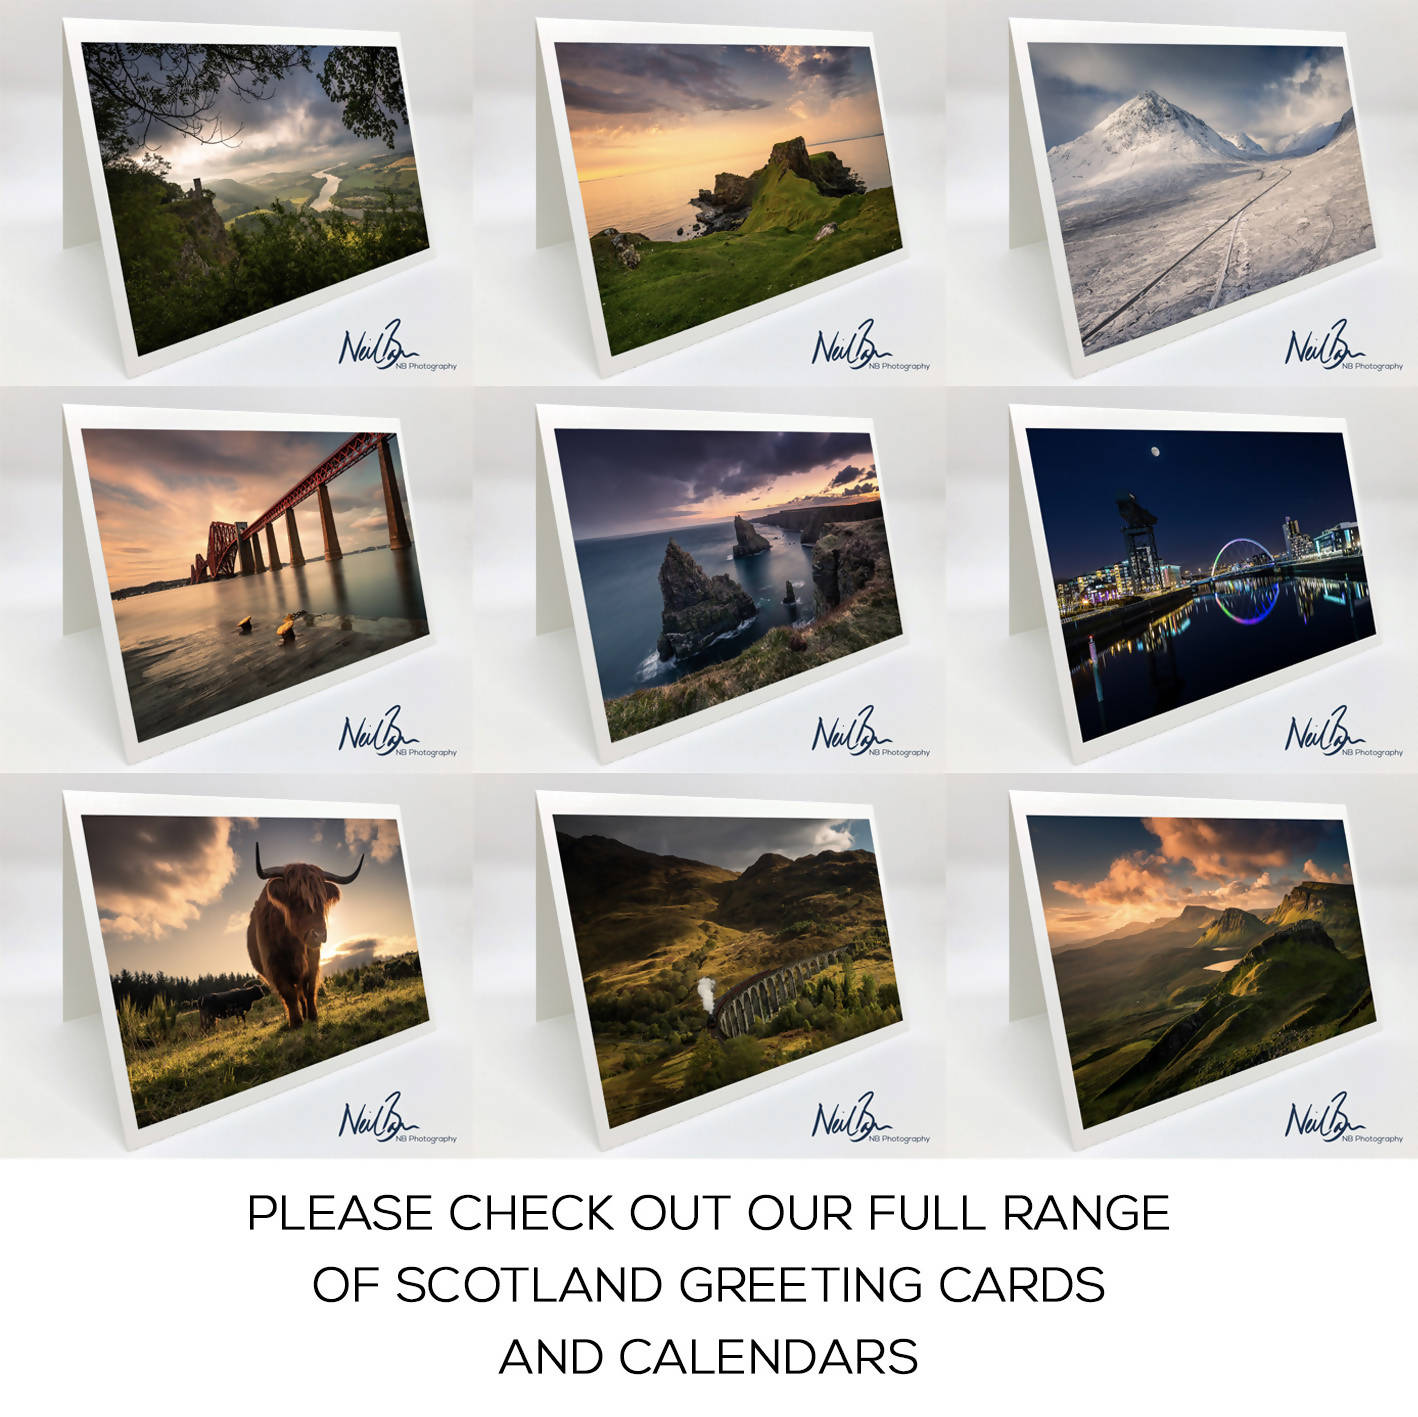 Bow Fiddle Rock, Portknockie - Scotland Greeting Card - Blank Inside